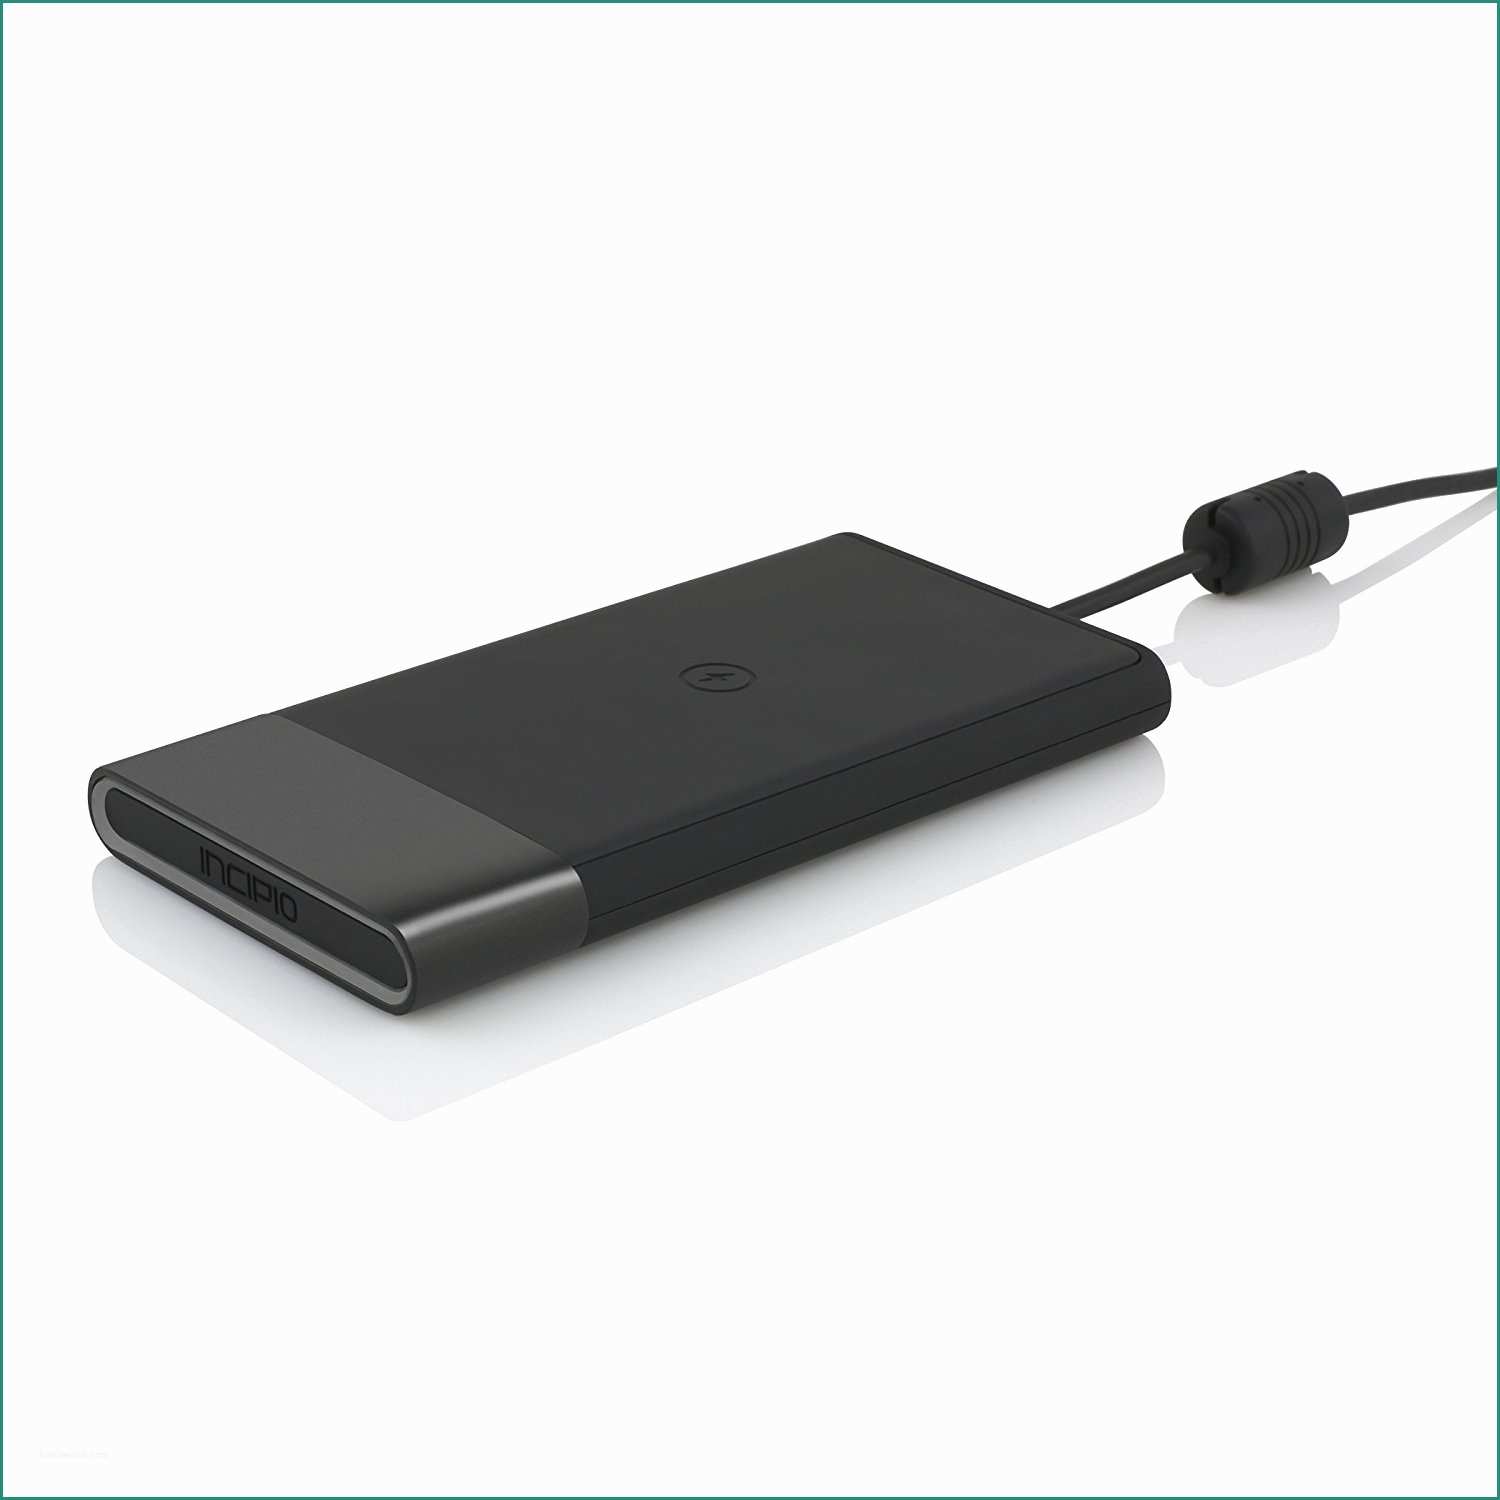 Lidl Piastra Induzione E I Migliori Caricabatterie Wireless Per Caricare L iPhone 8 Spendendo